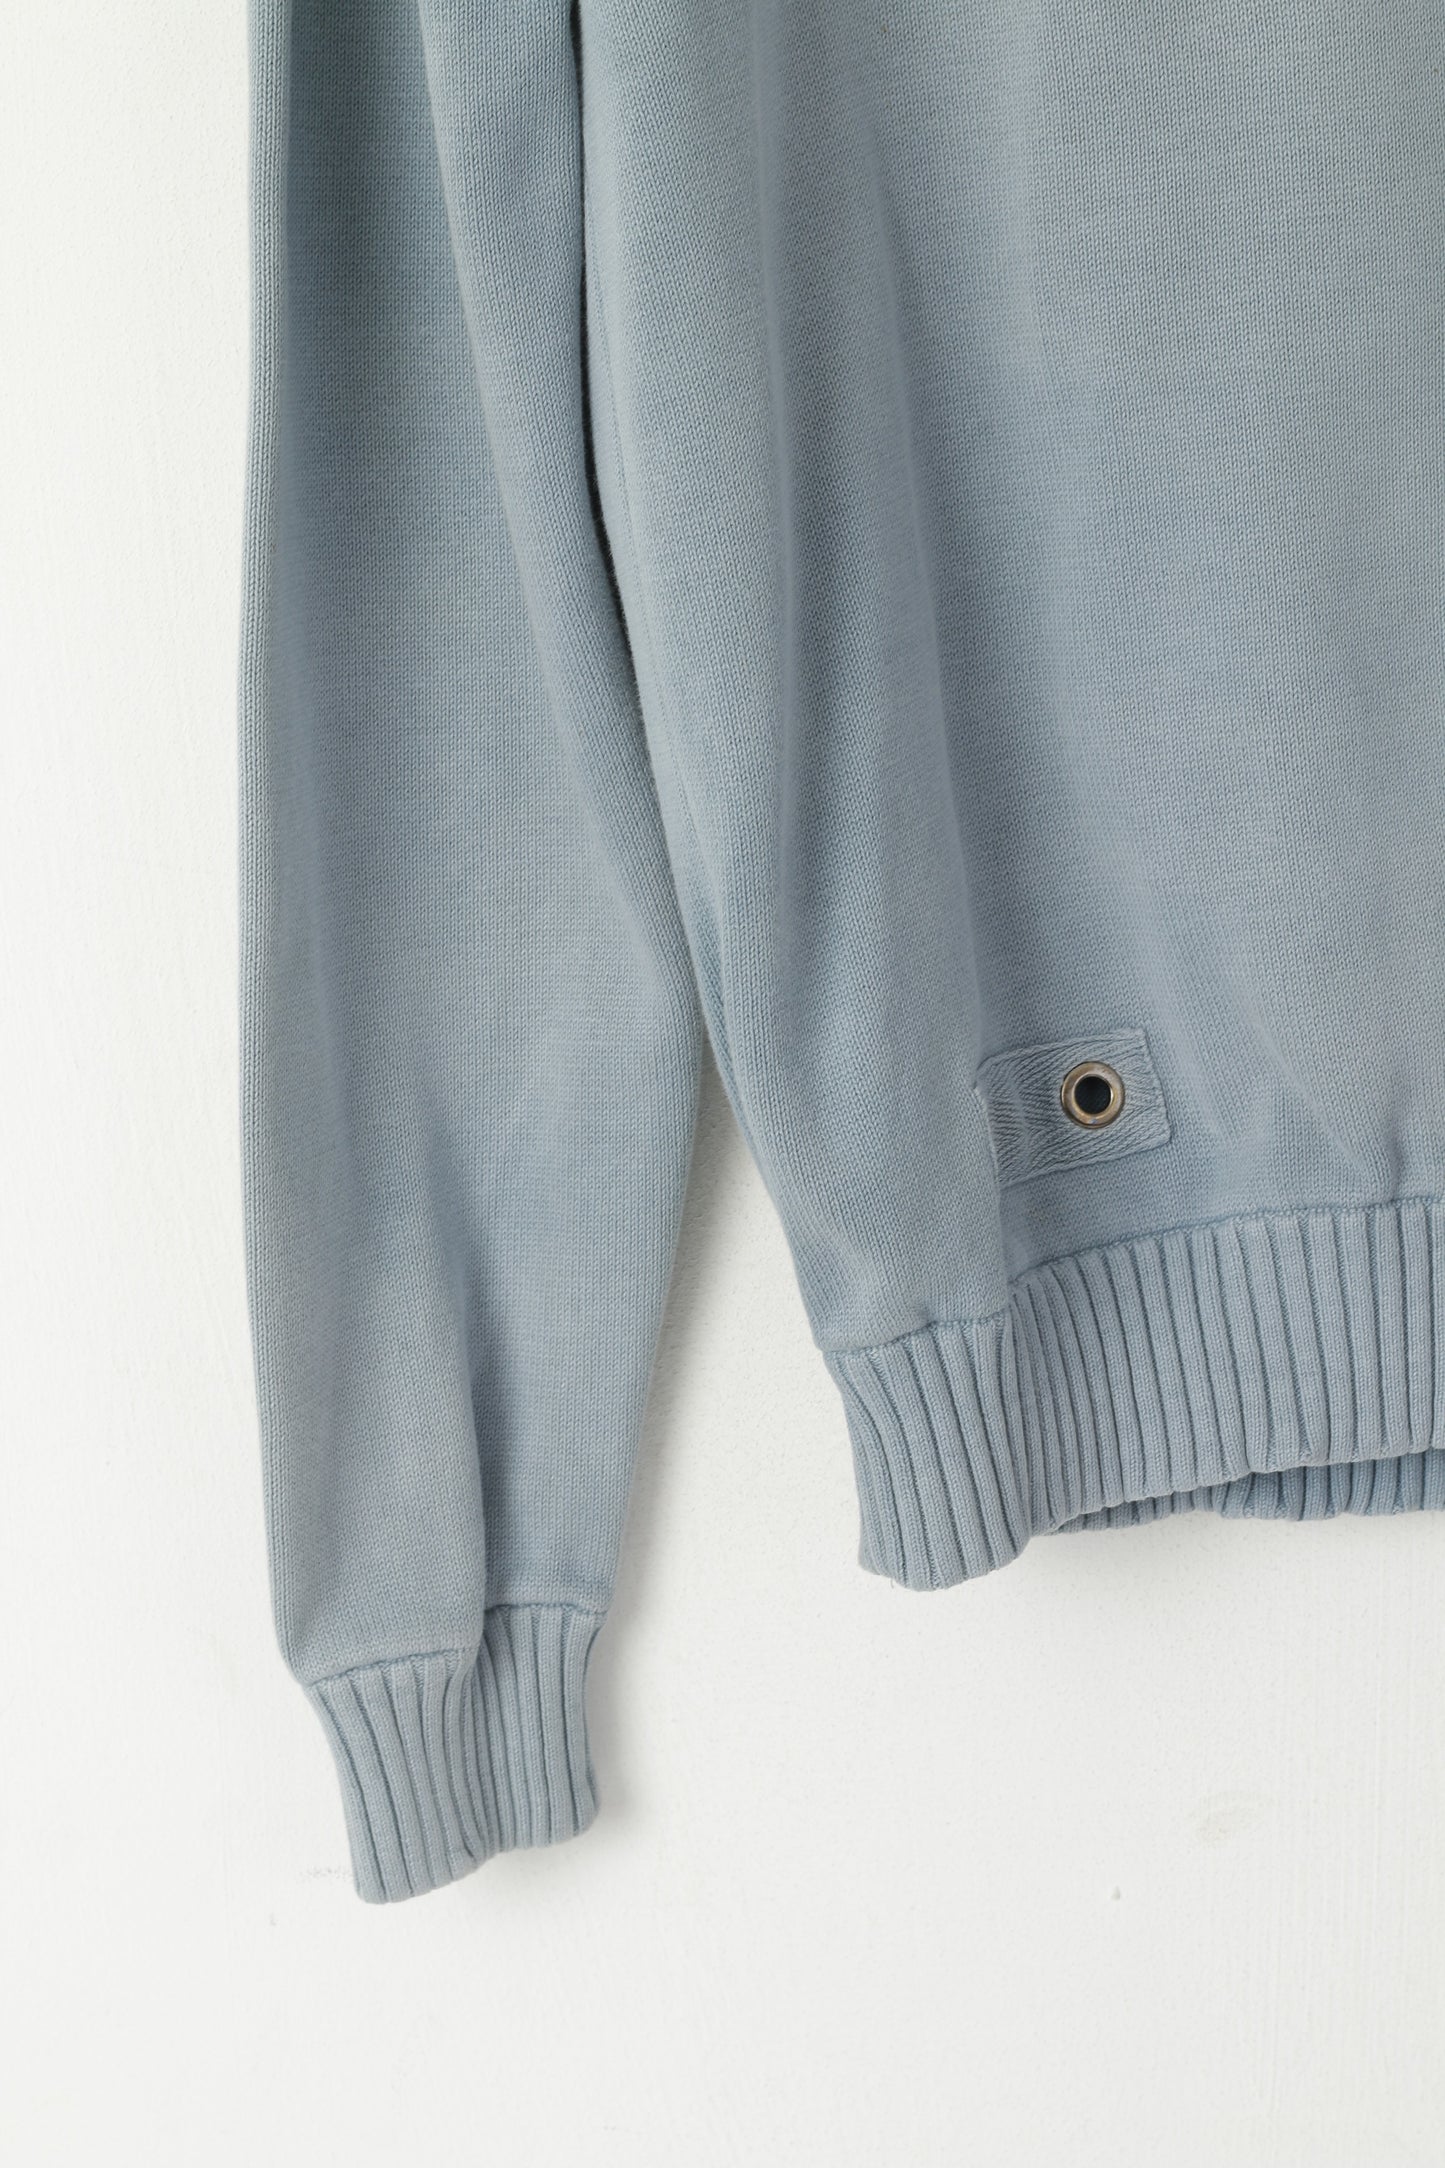 Hugo Boss Men L (S) Jumper Blue Cotton Faded Zip Neck Classic Plain Sweater